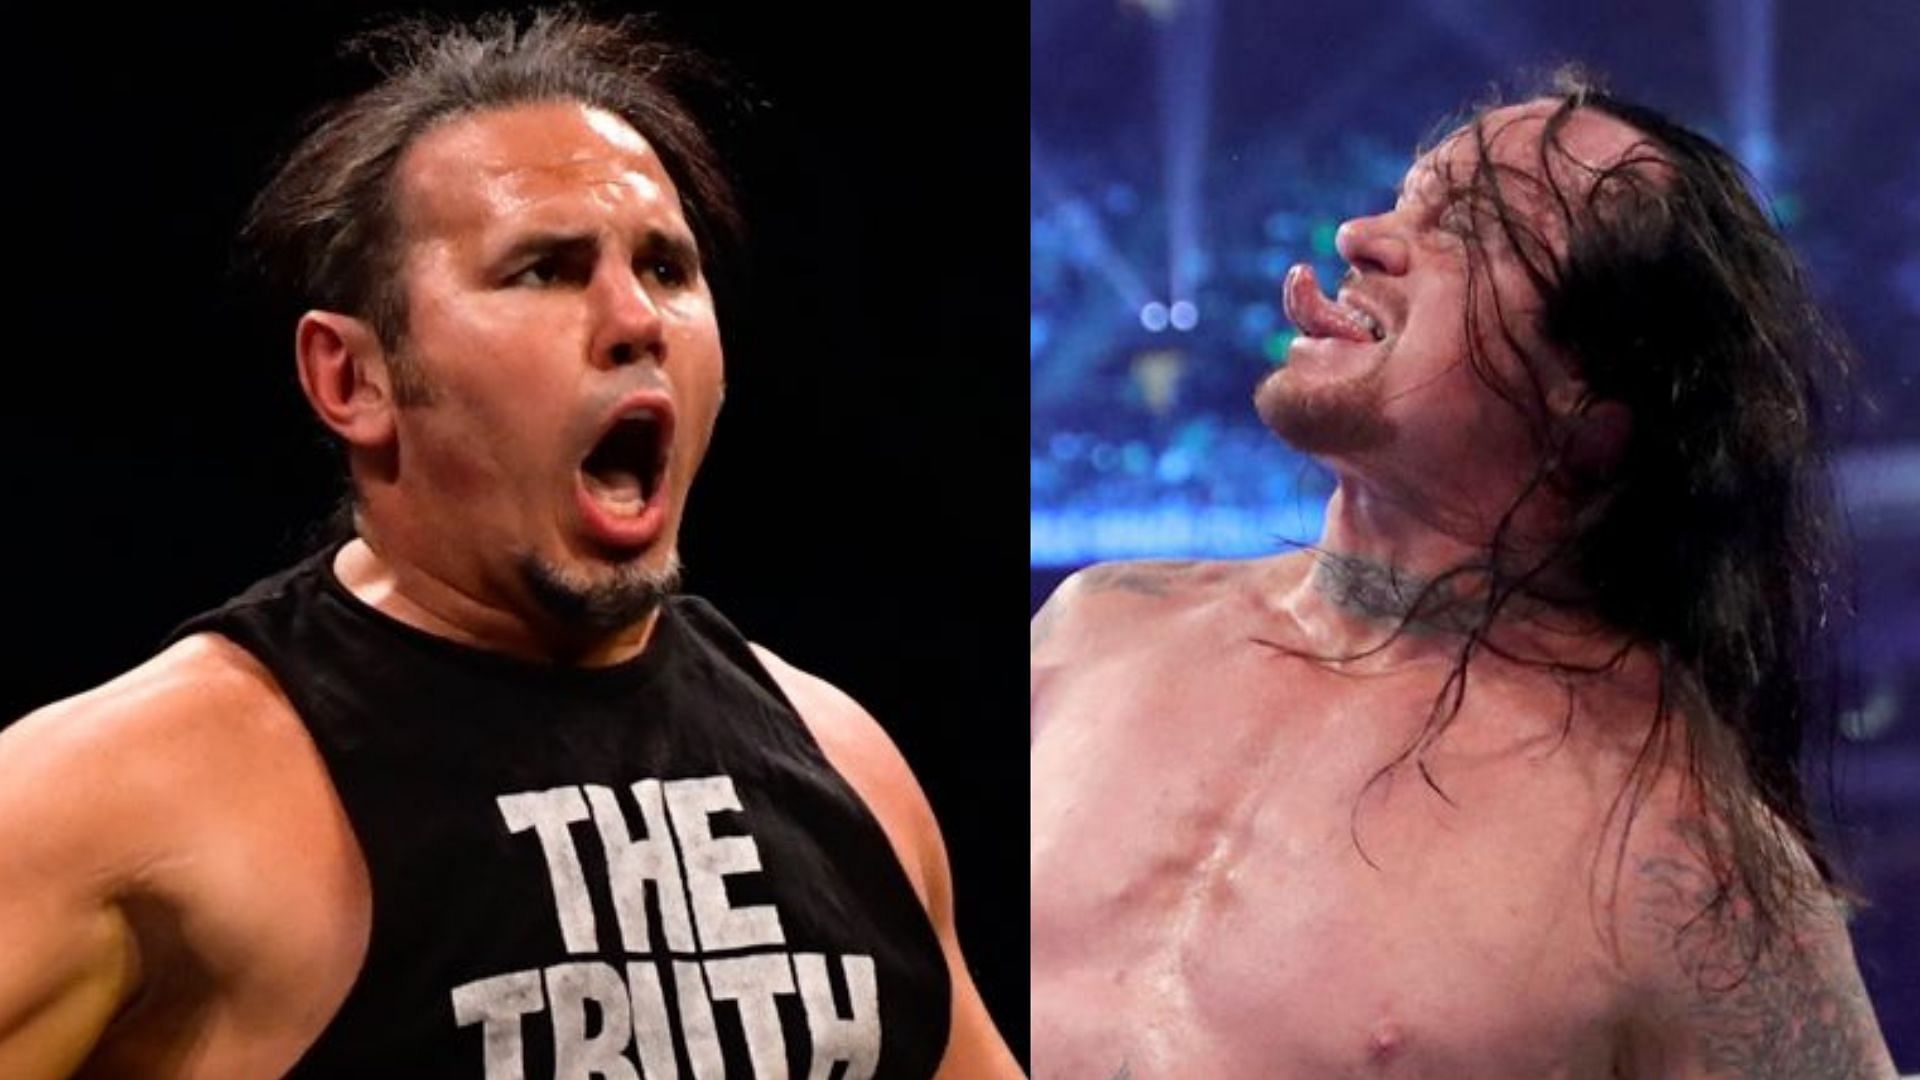 Matt Hardy has compared an AEW star to The Undertaker